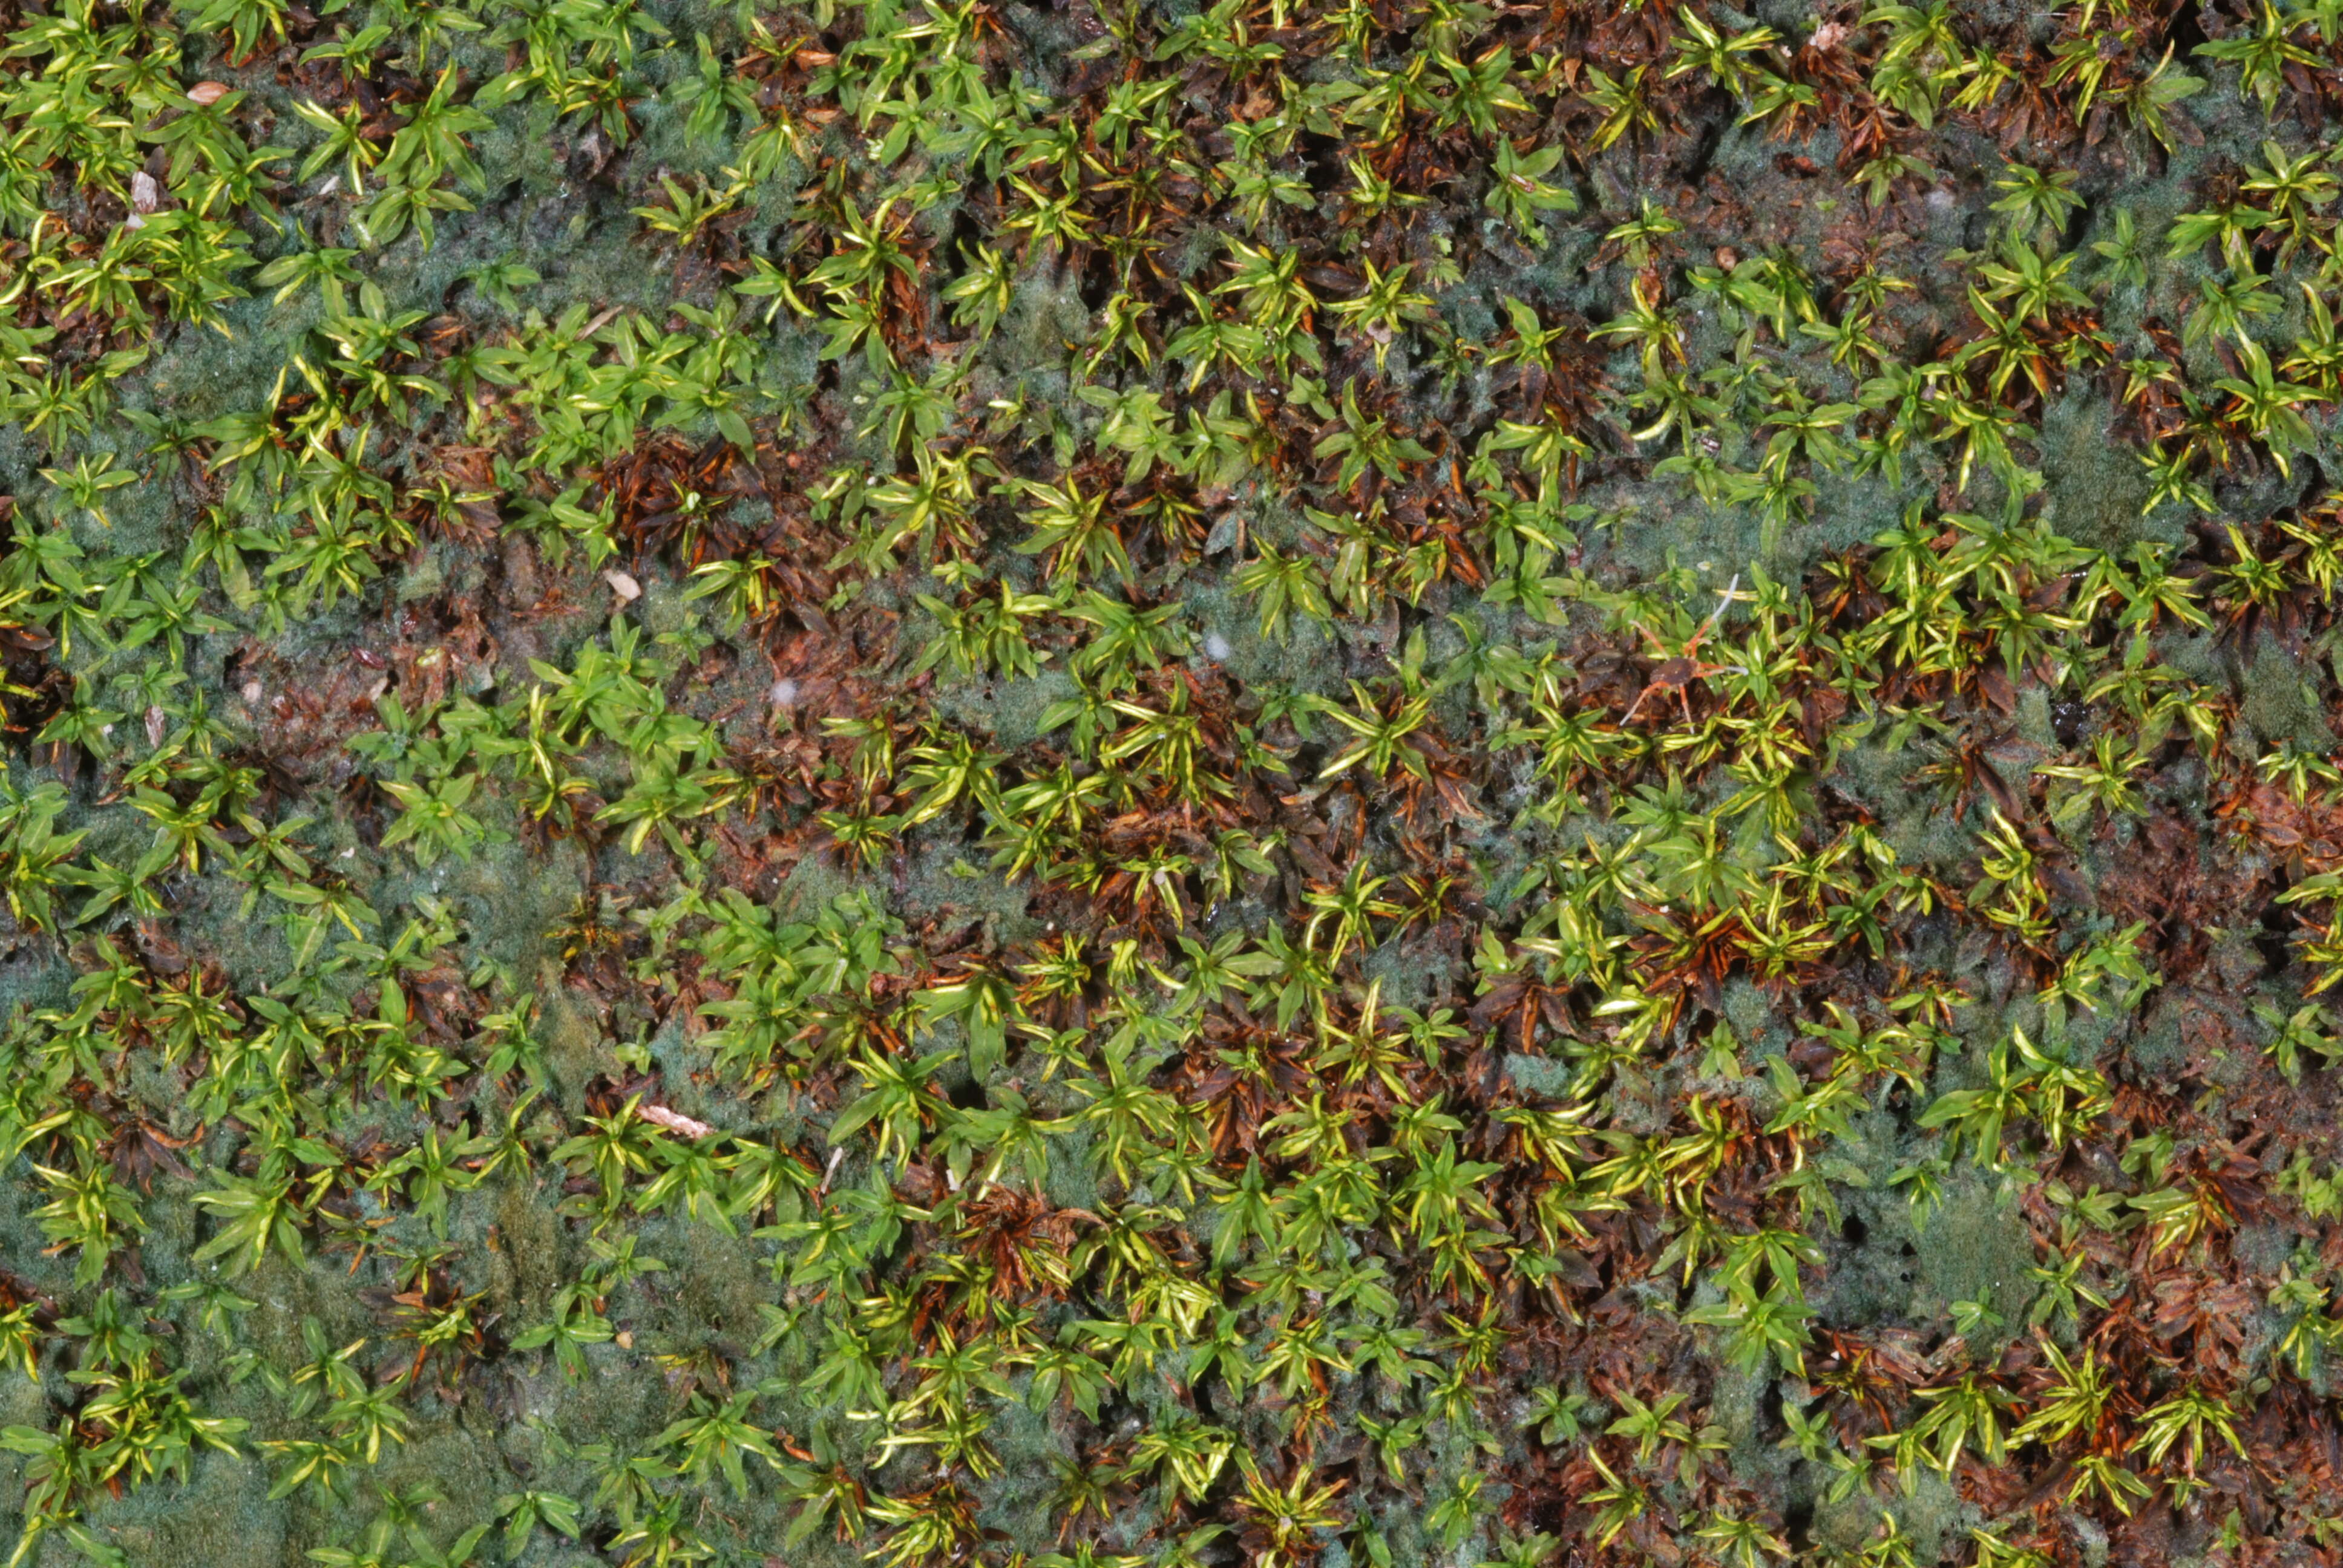 Image of hyophila moss